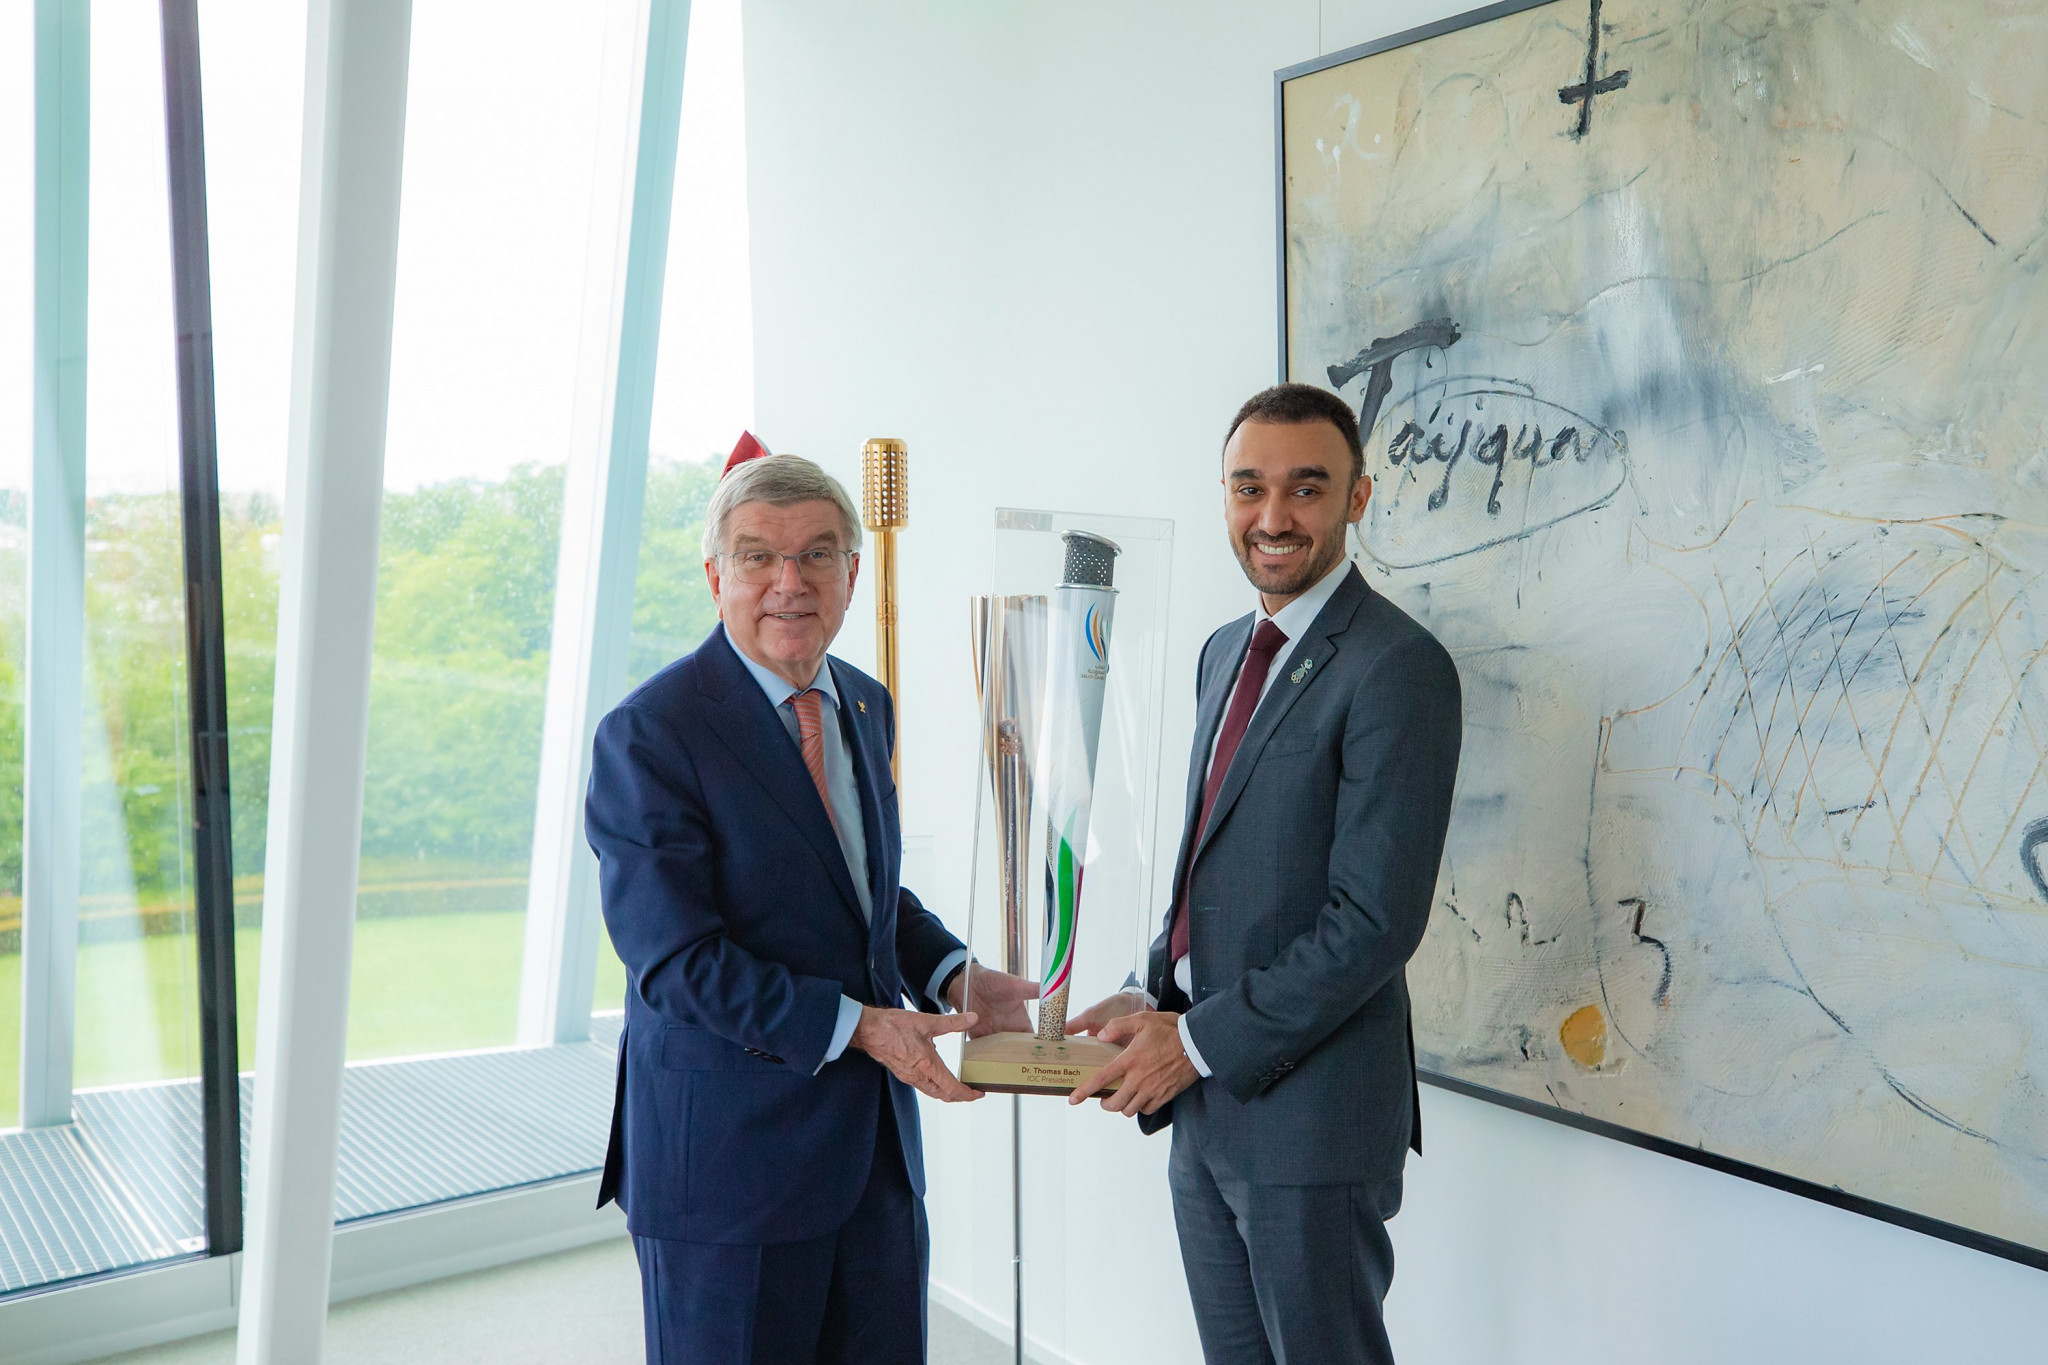 IOC President Thomas Bach has met with SOPC President Abdulaziz bin Turki Al-Faisal ©SOPC